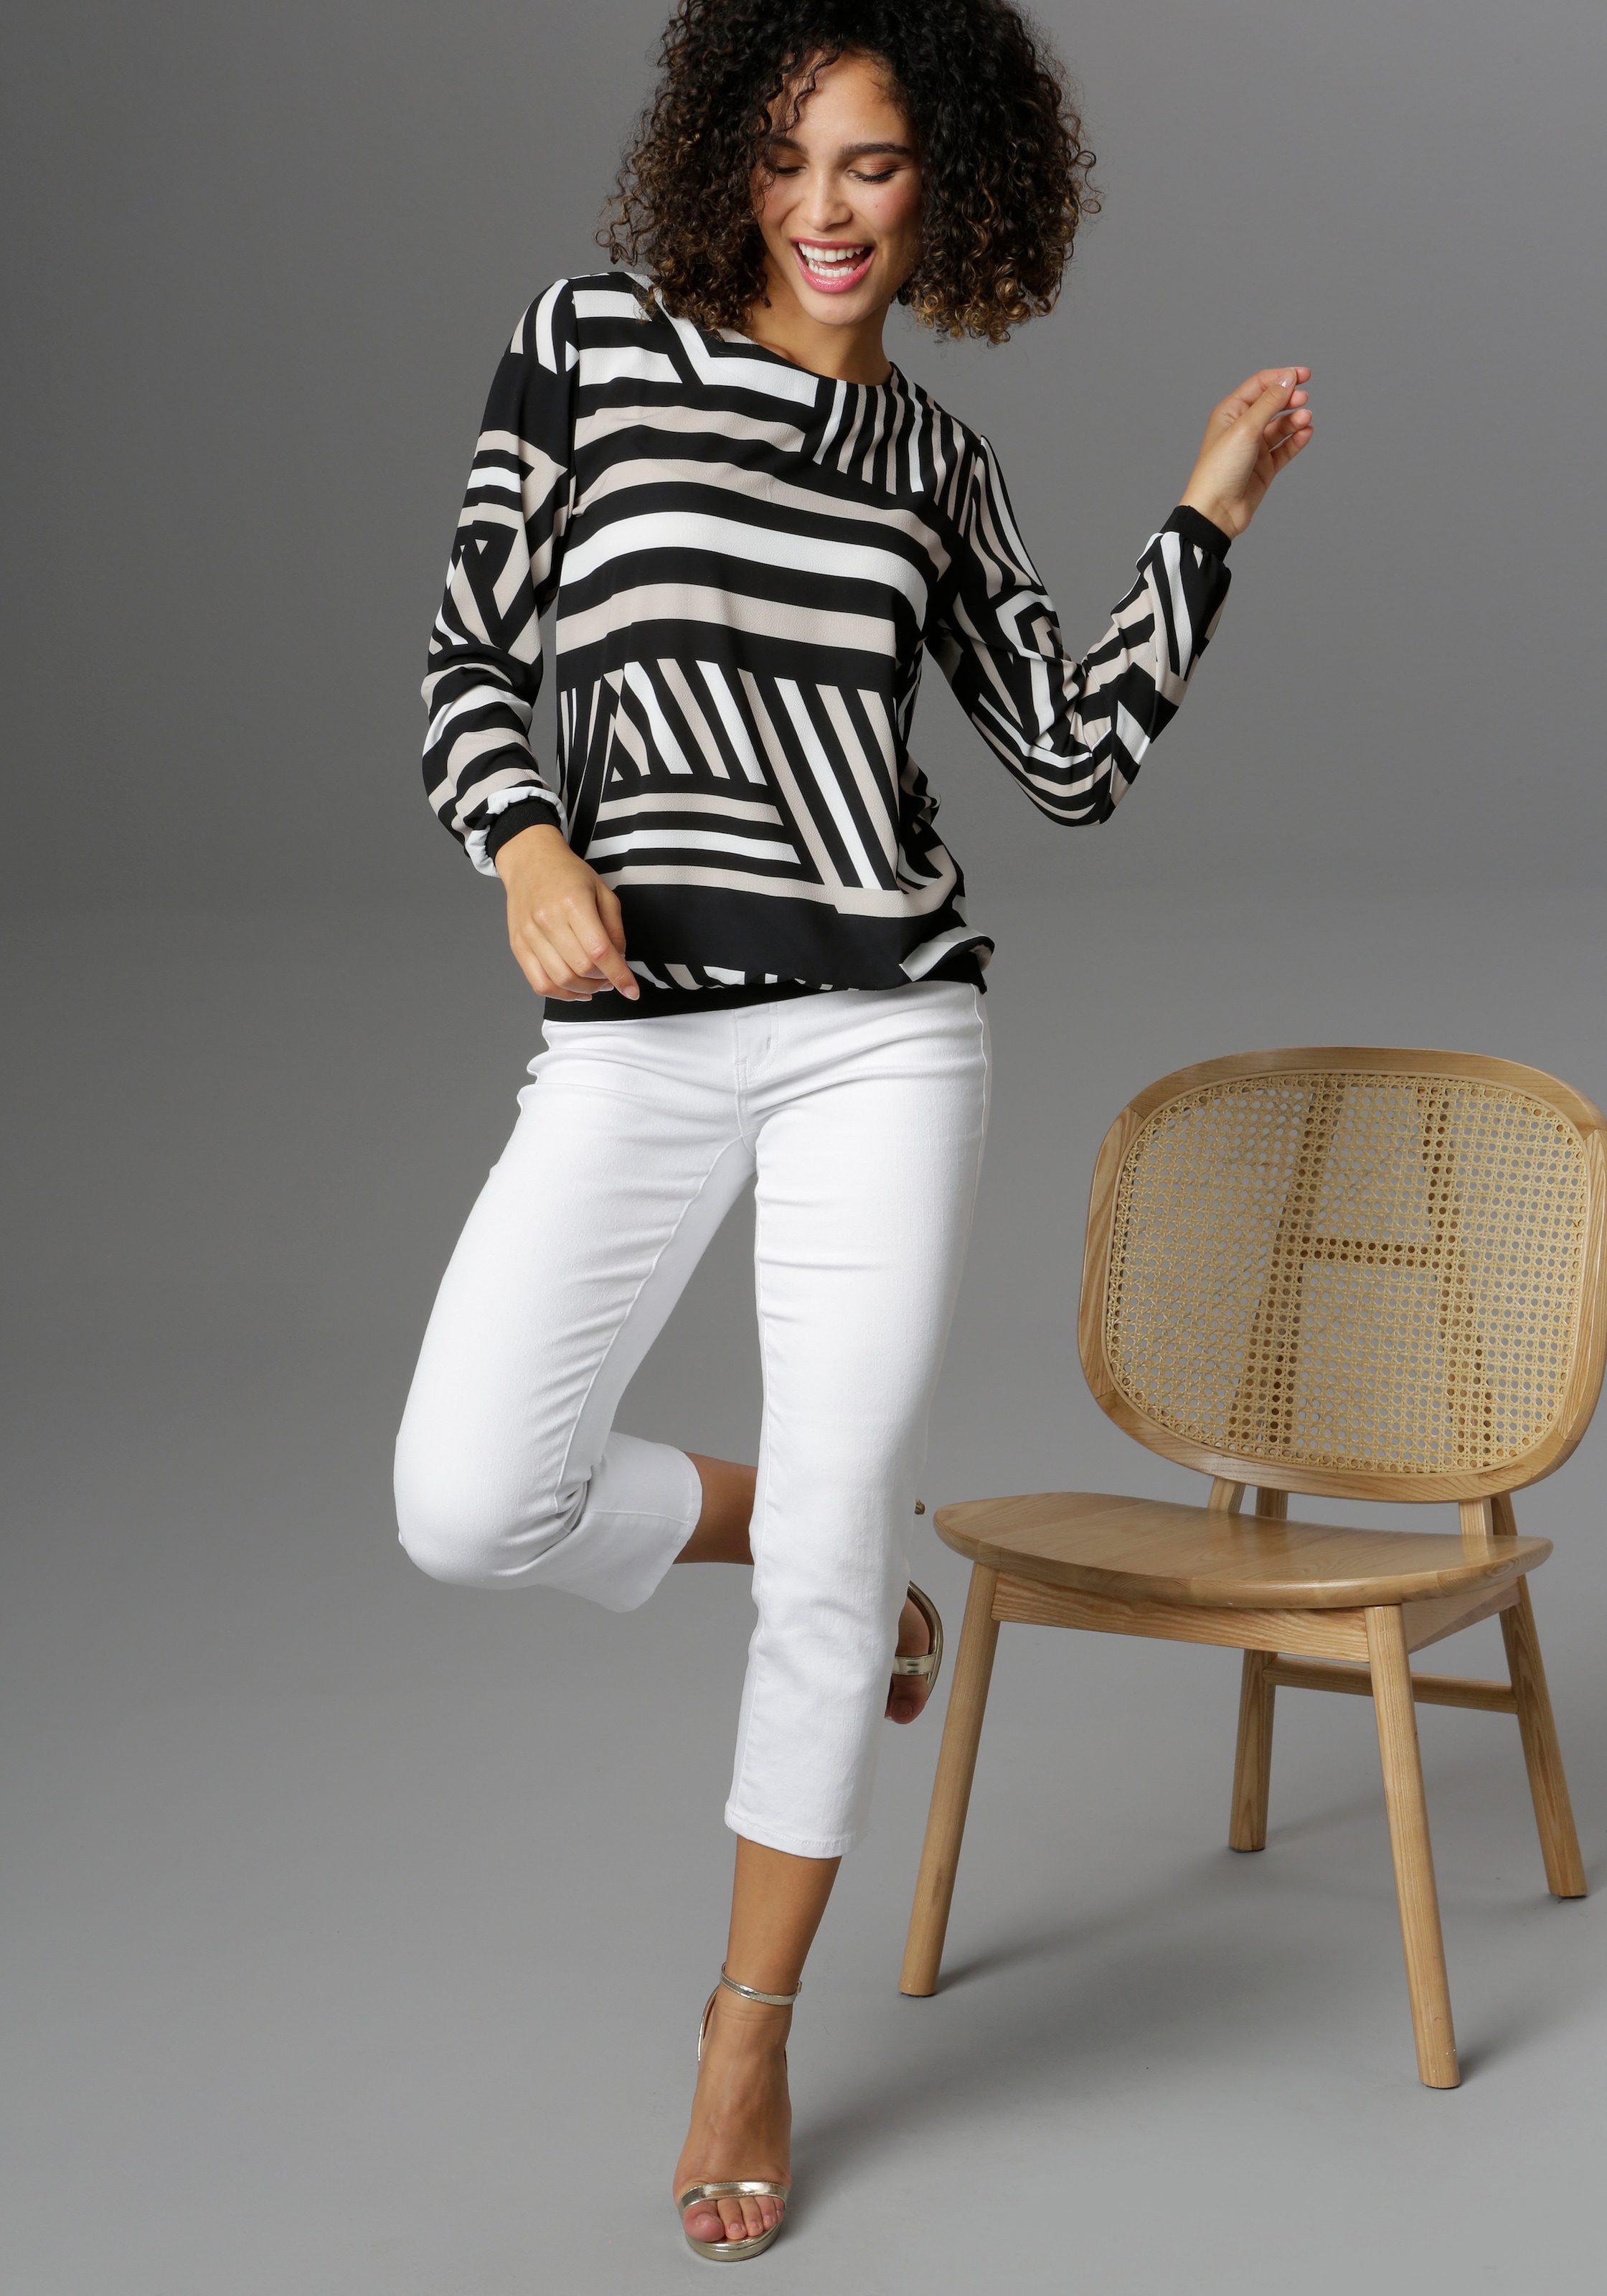 Shirtbluse, SELECTED grafischem Muster im Online OTTO Shop mit Aniston